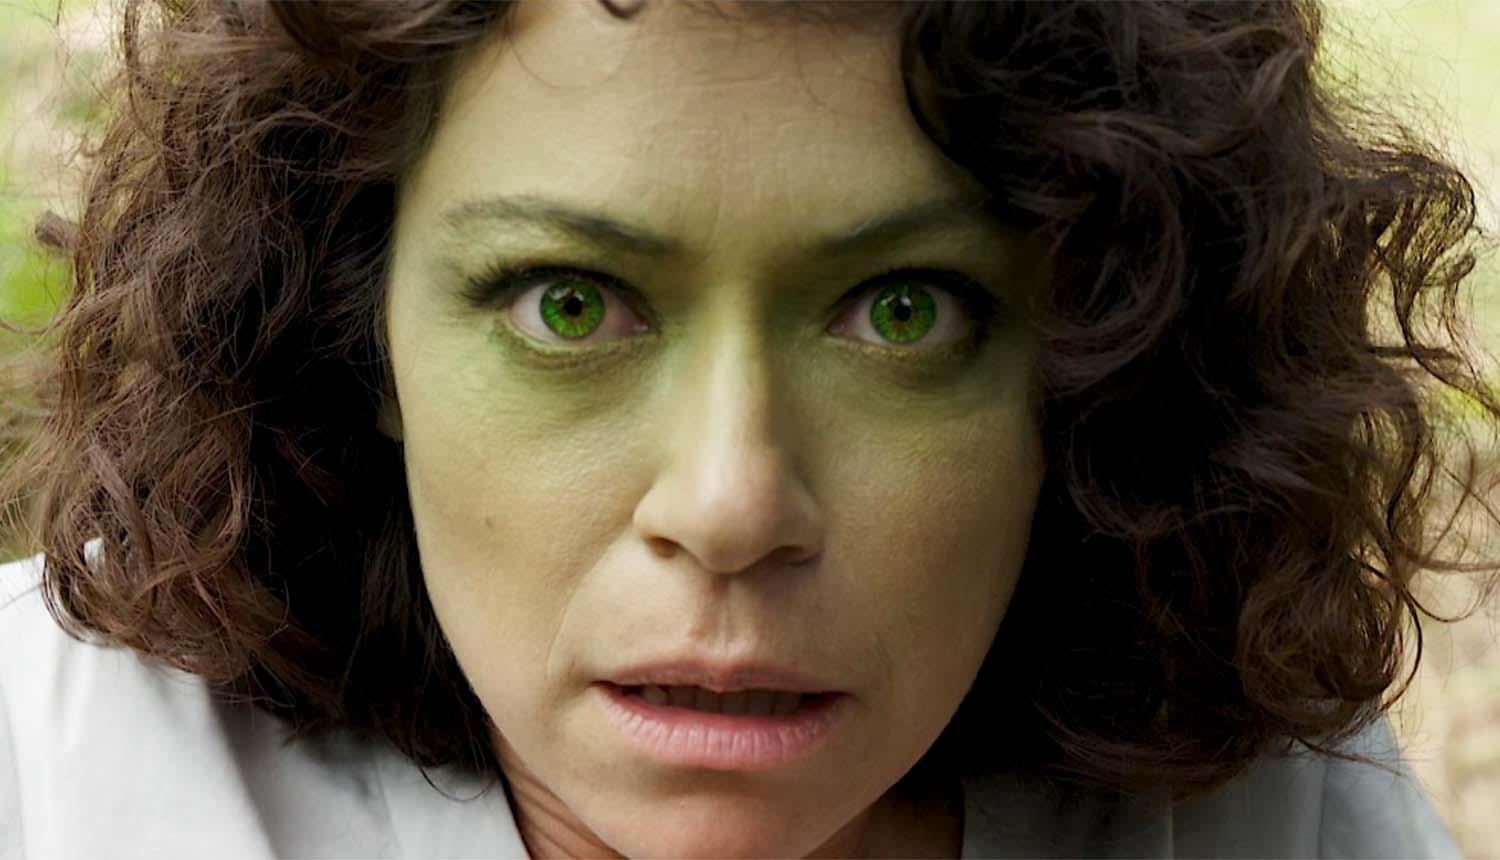 She-Hulk' Just Set Up a Major Marvel Movie